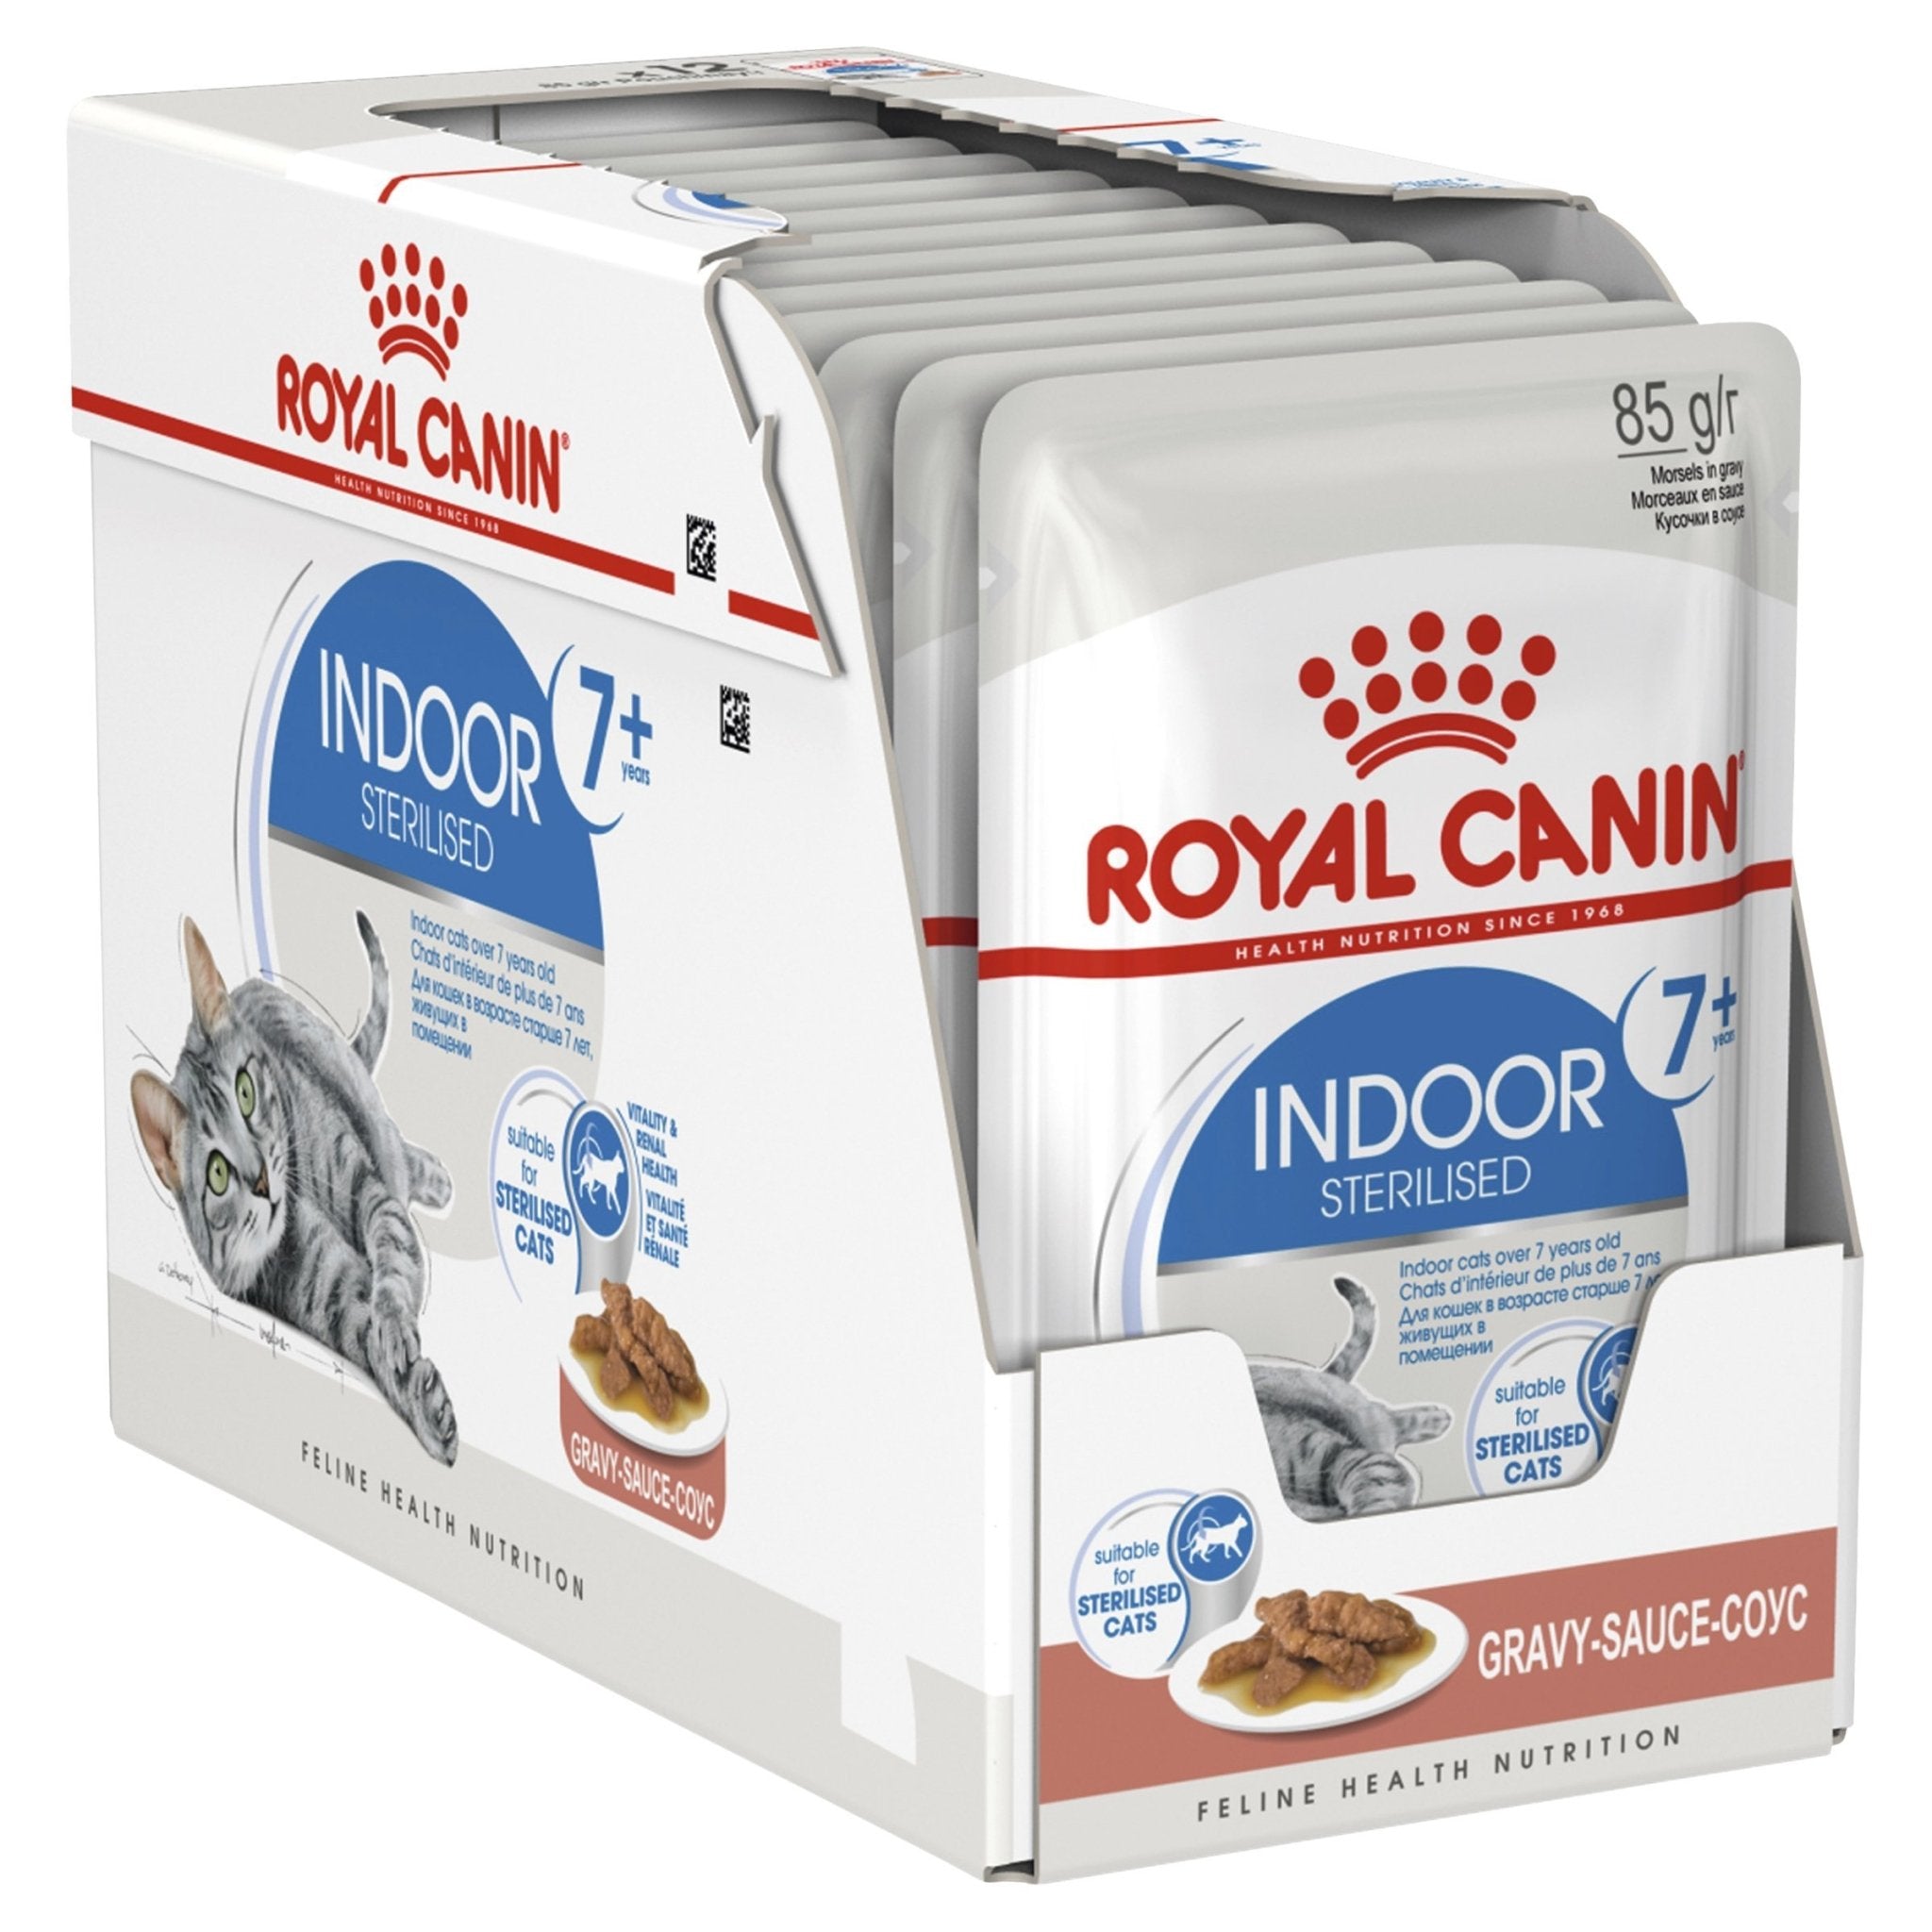 Royal Canin® Indoor 7+, 12x85g